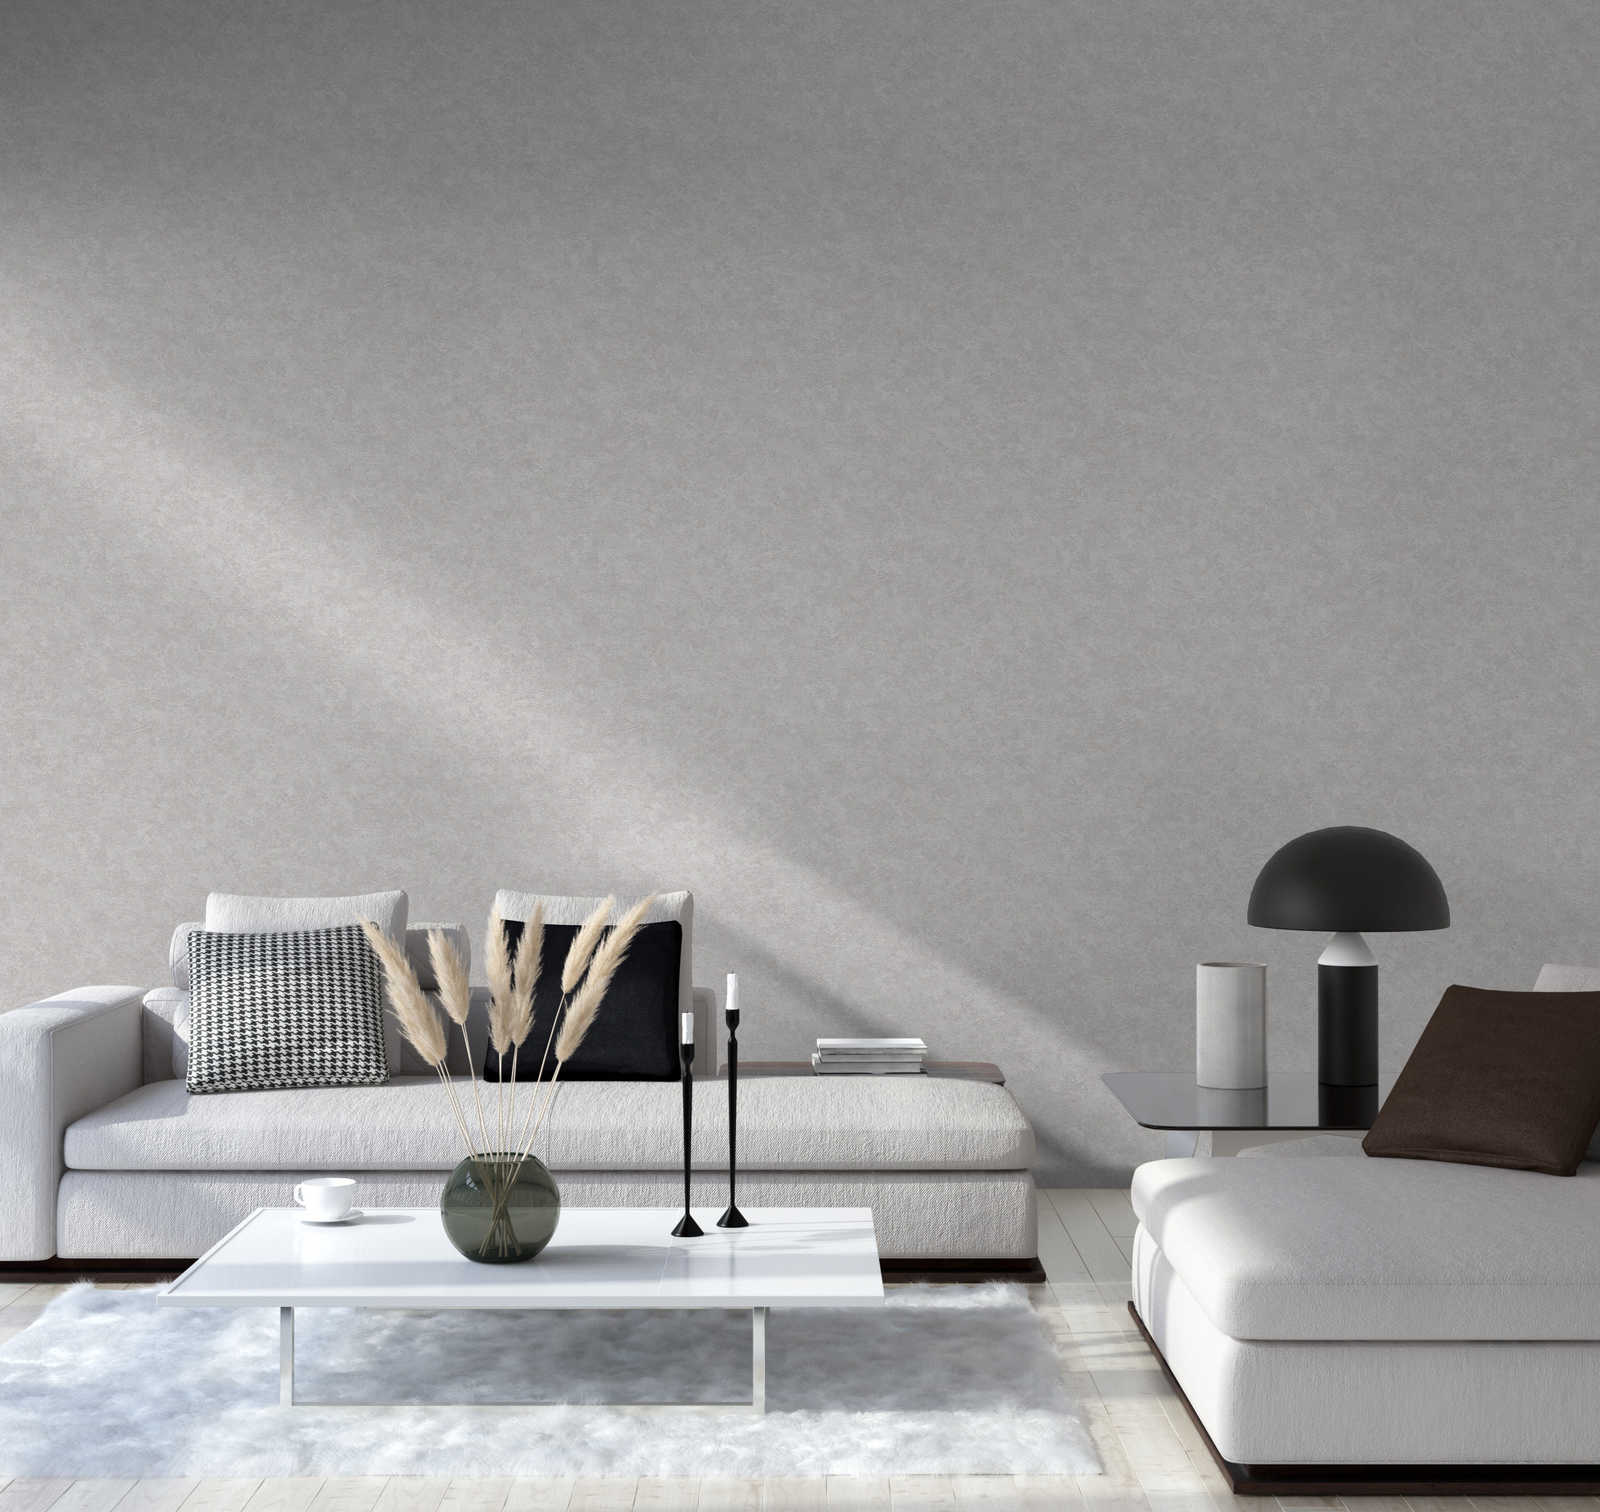             Melange wallpaper with textured pattern - grey
        